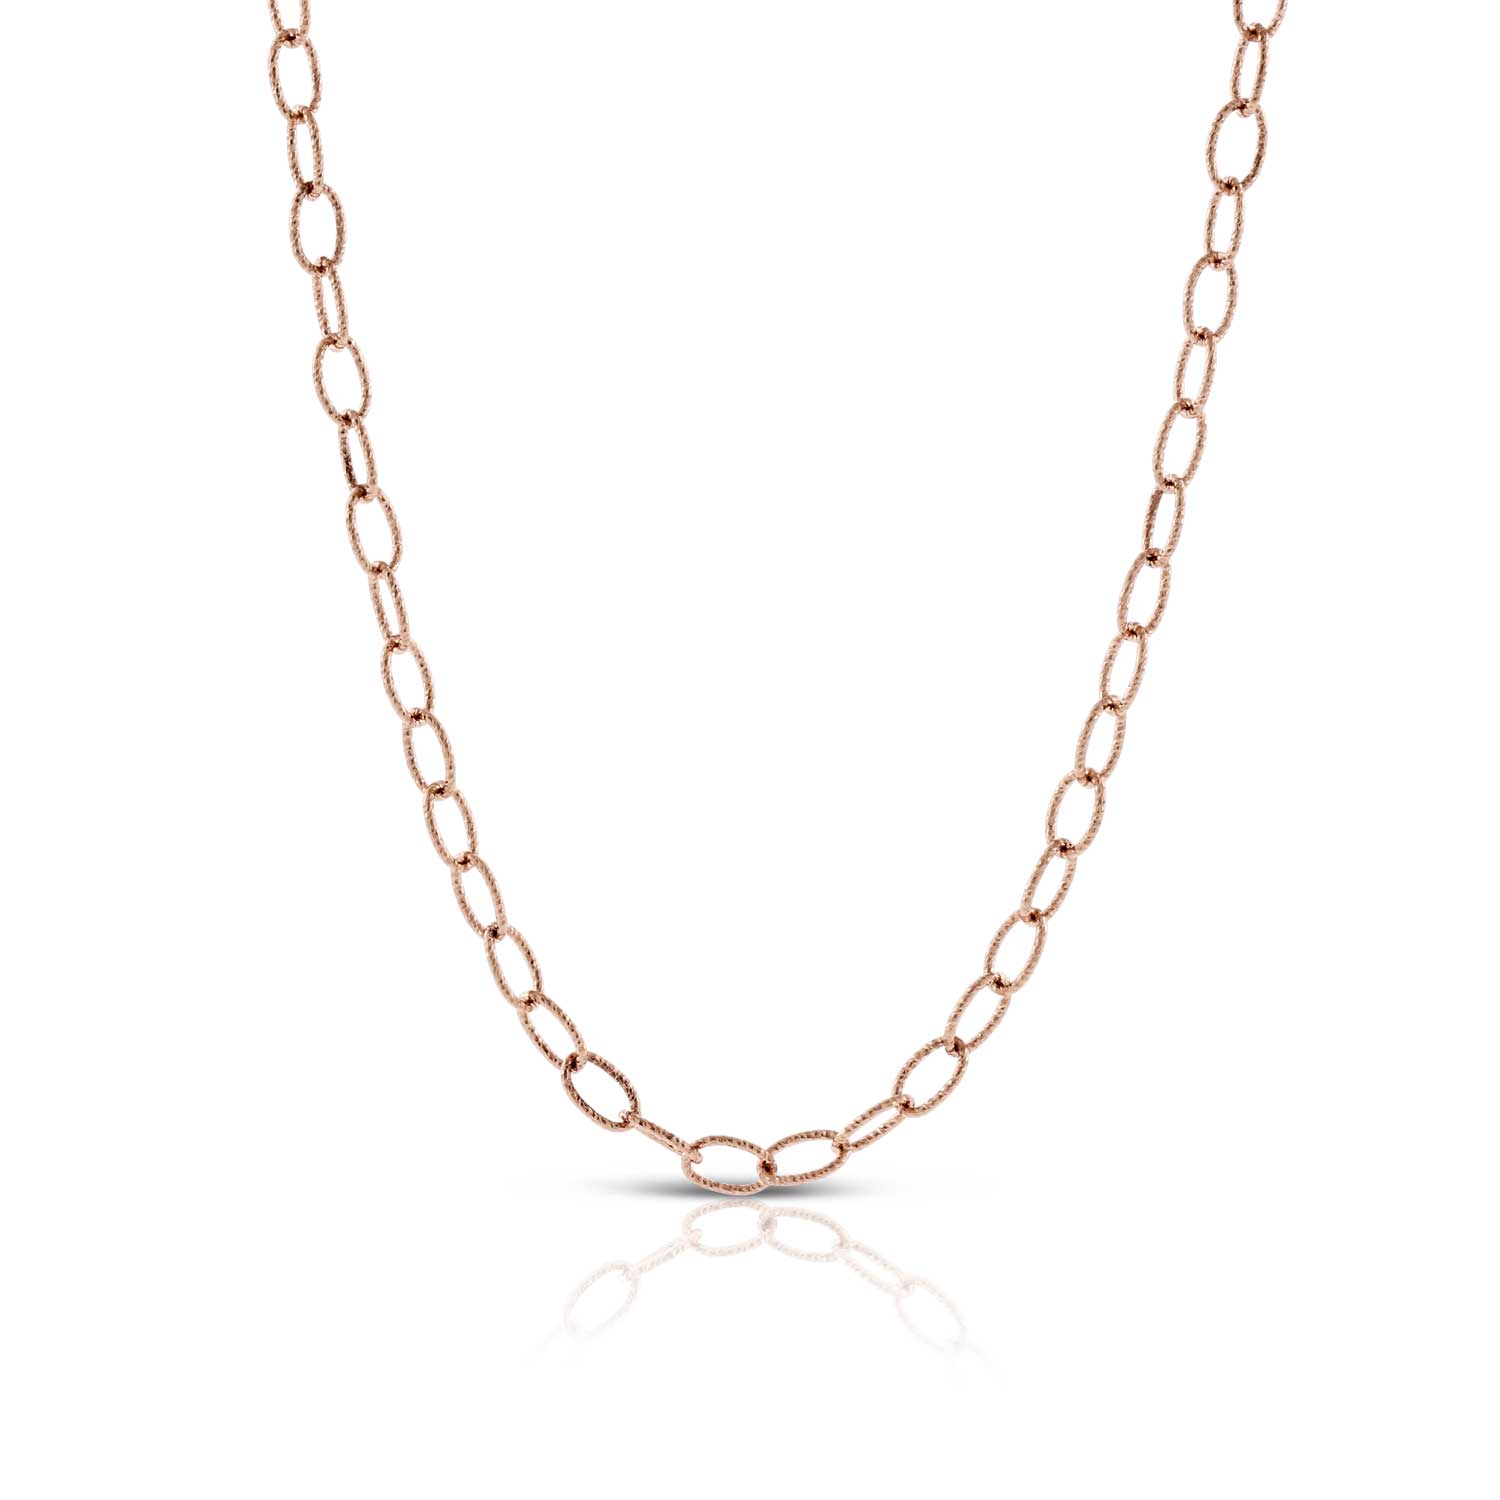 Beautiful 32" long ROSE GOLD tone & large diamante heart pendant  chain necklace